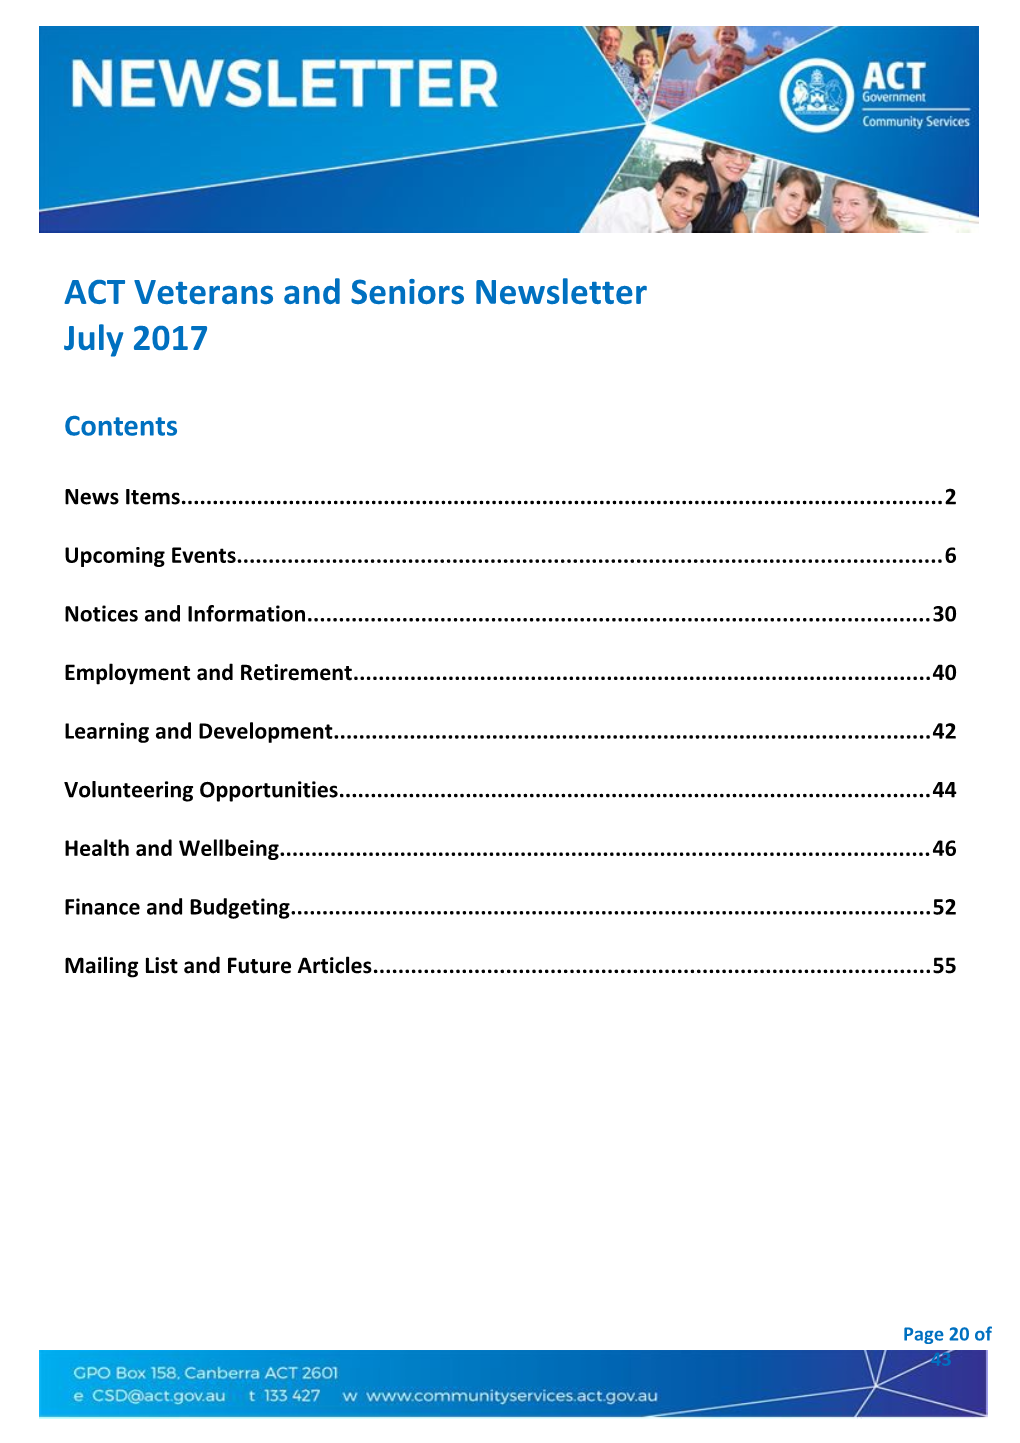 ACT Veterans and Seniors Newsletter July 2017